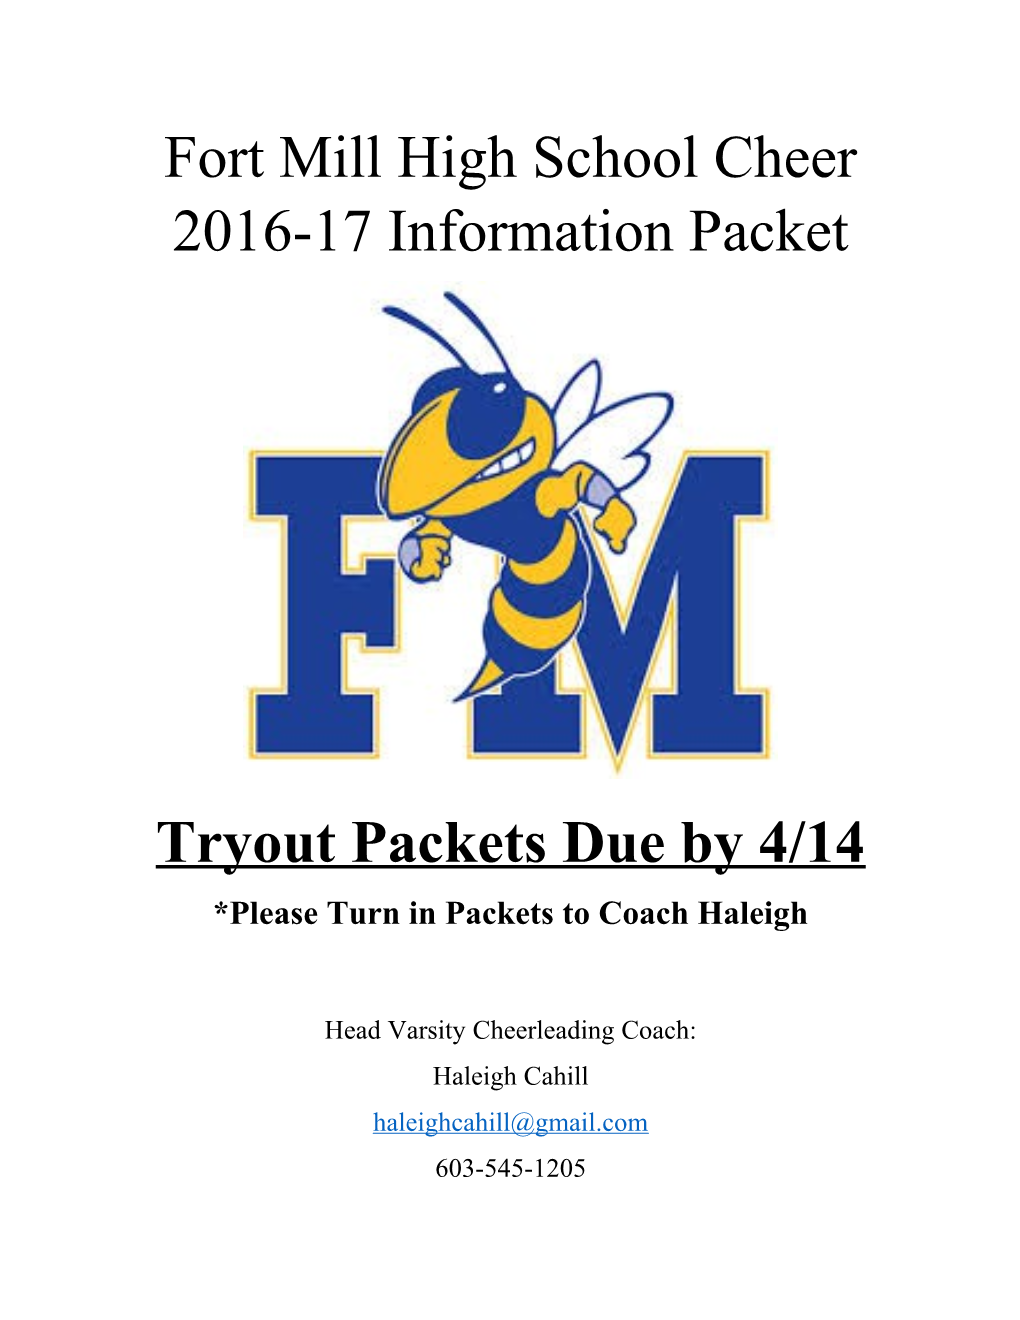 Fort Mill High School Cheer 2016-17 Information Packet